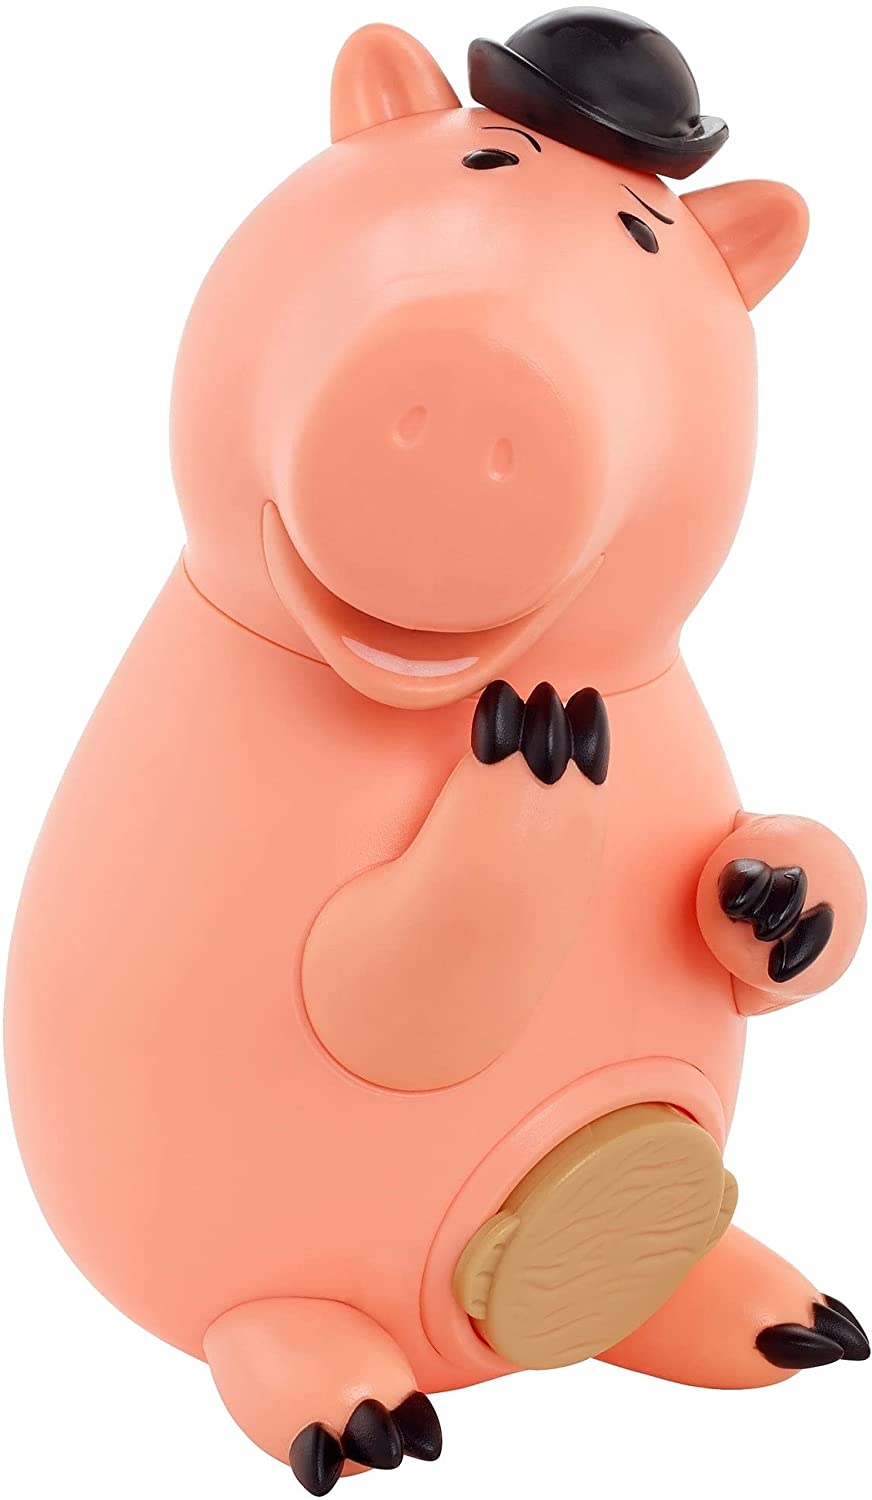 Disney Pixar Toy Story Action Figure Evil Doctor Porkchop Piggybank Toy Movie Character